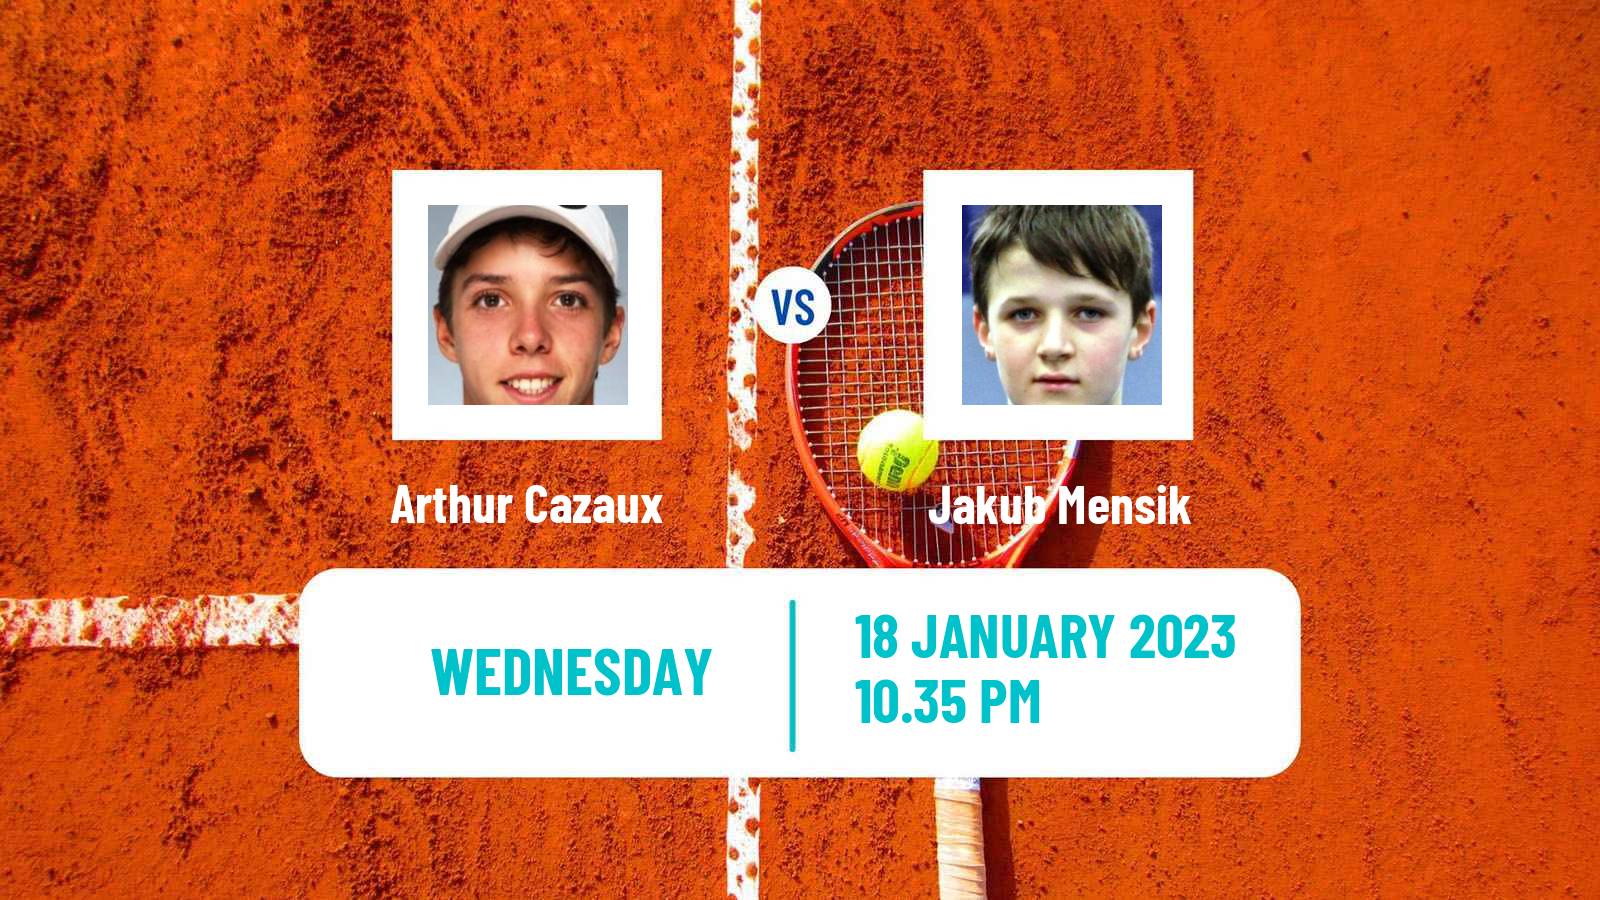 Tennis ATP Challenger Arthur Cazaux - Jakub Mensik